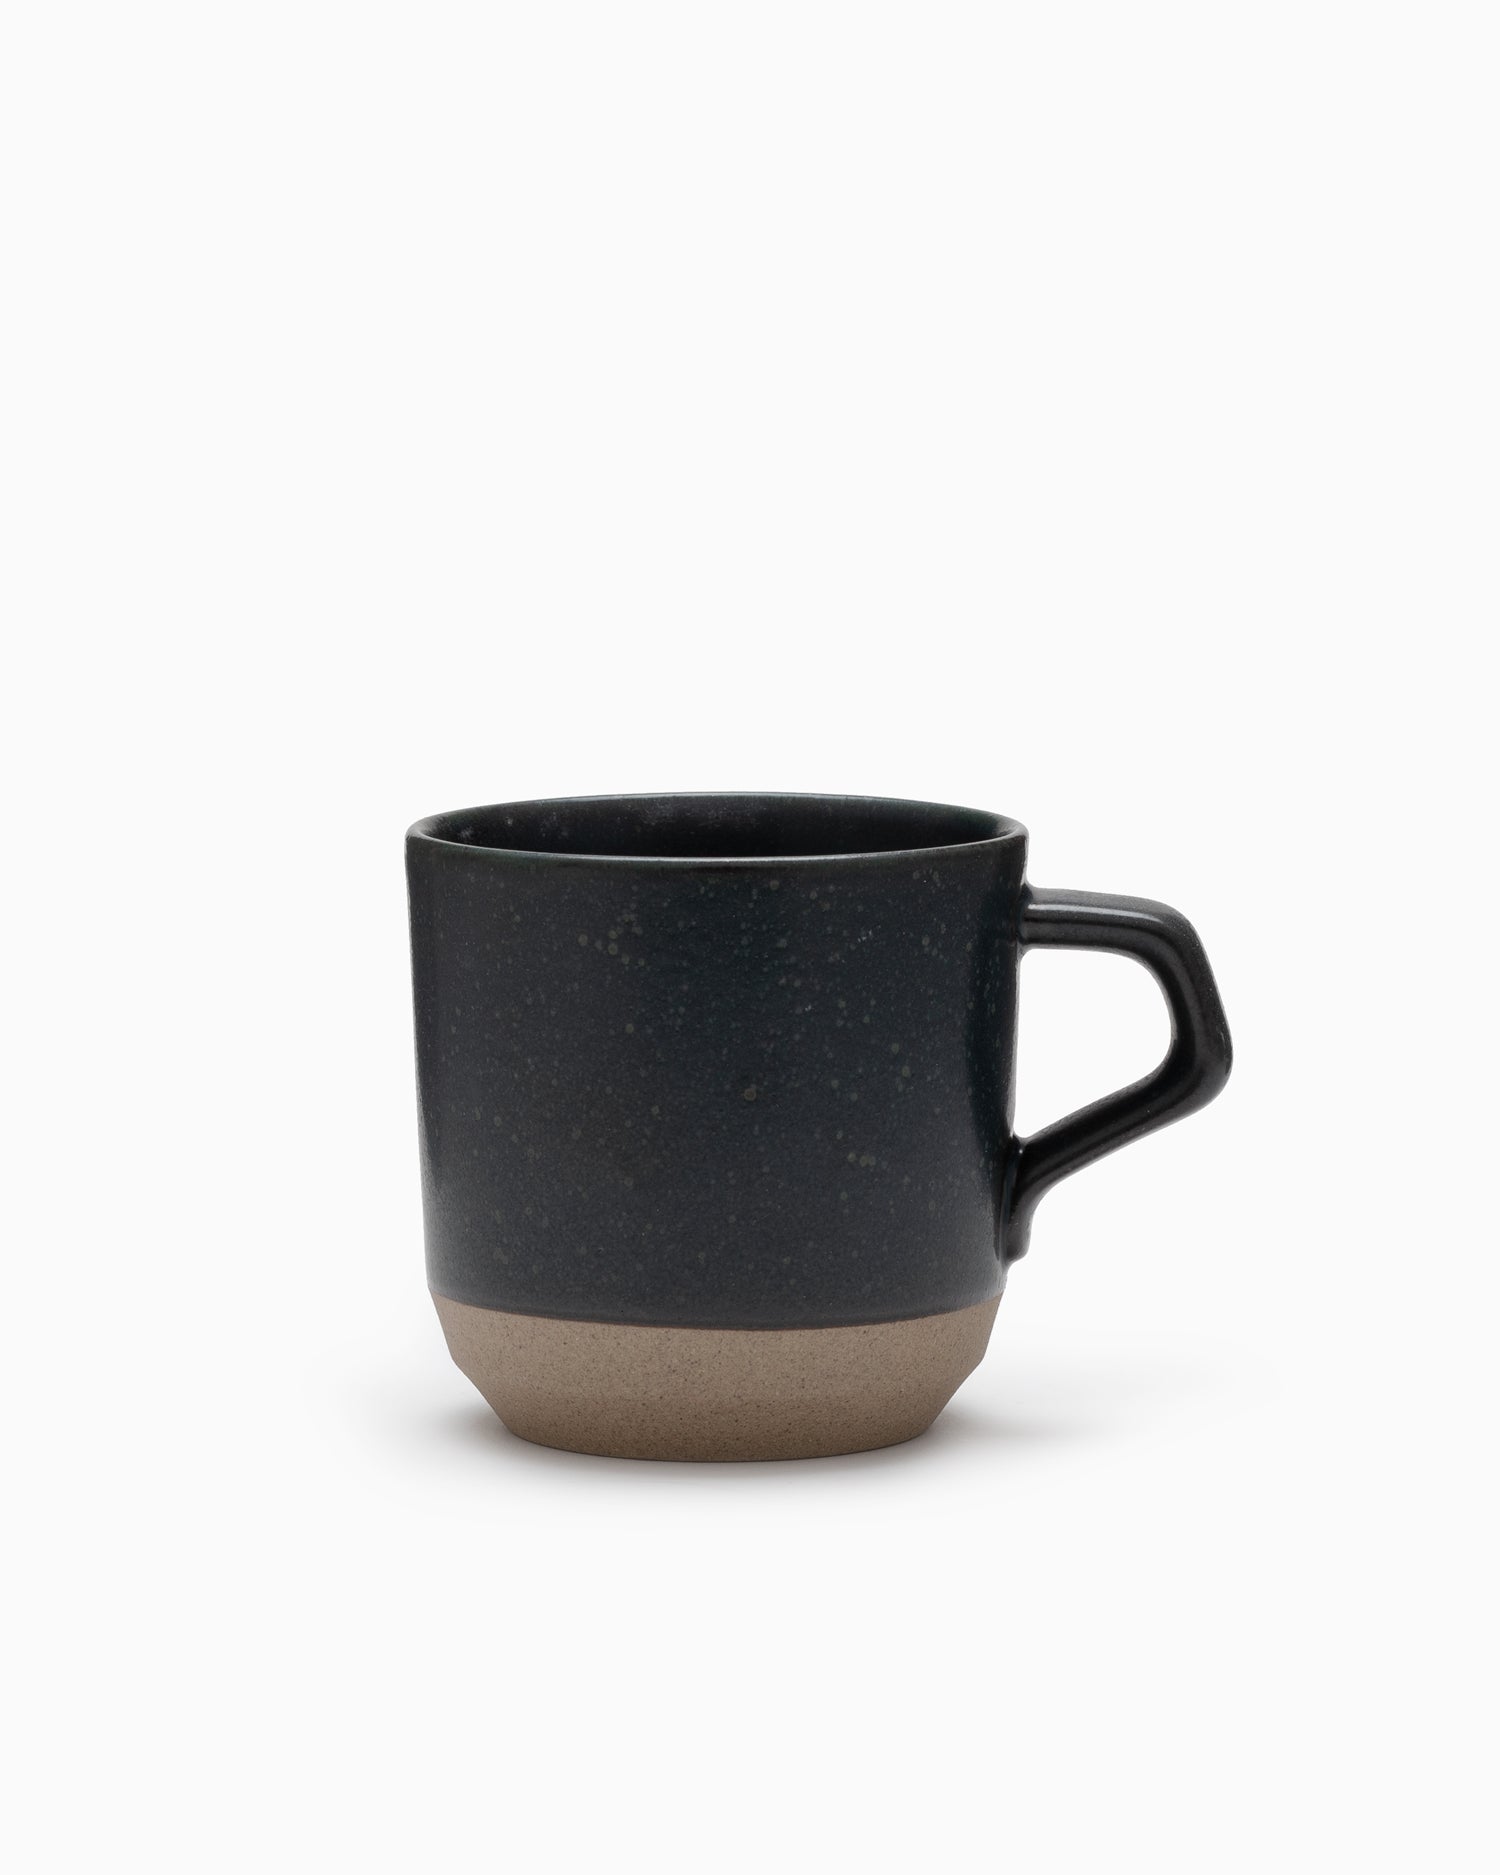 CLK-151 Small Mug - Black